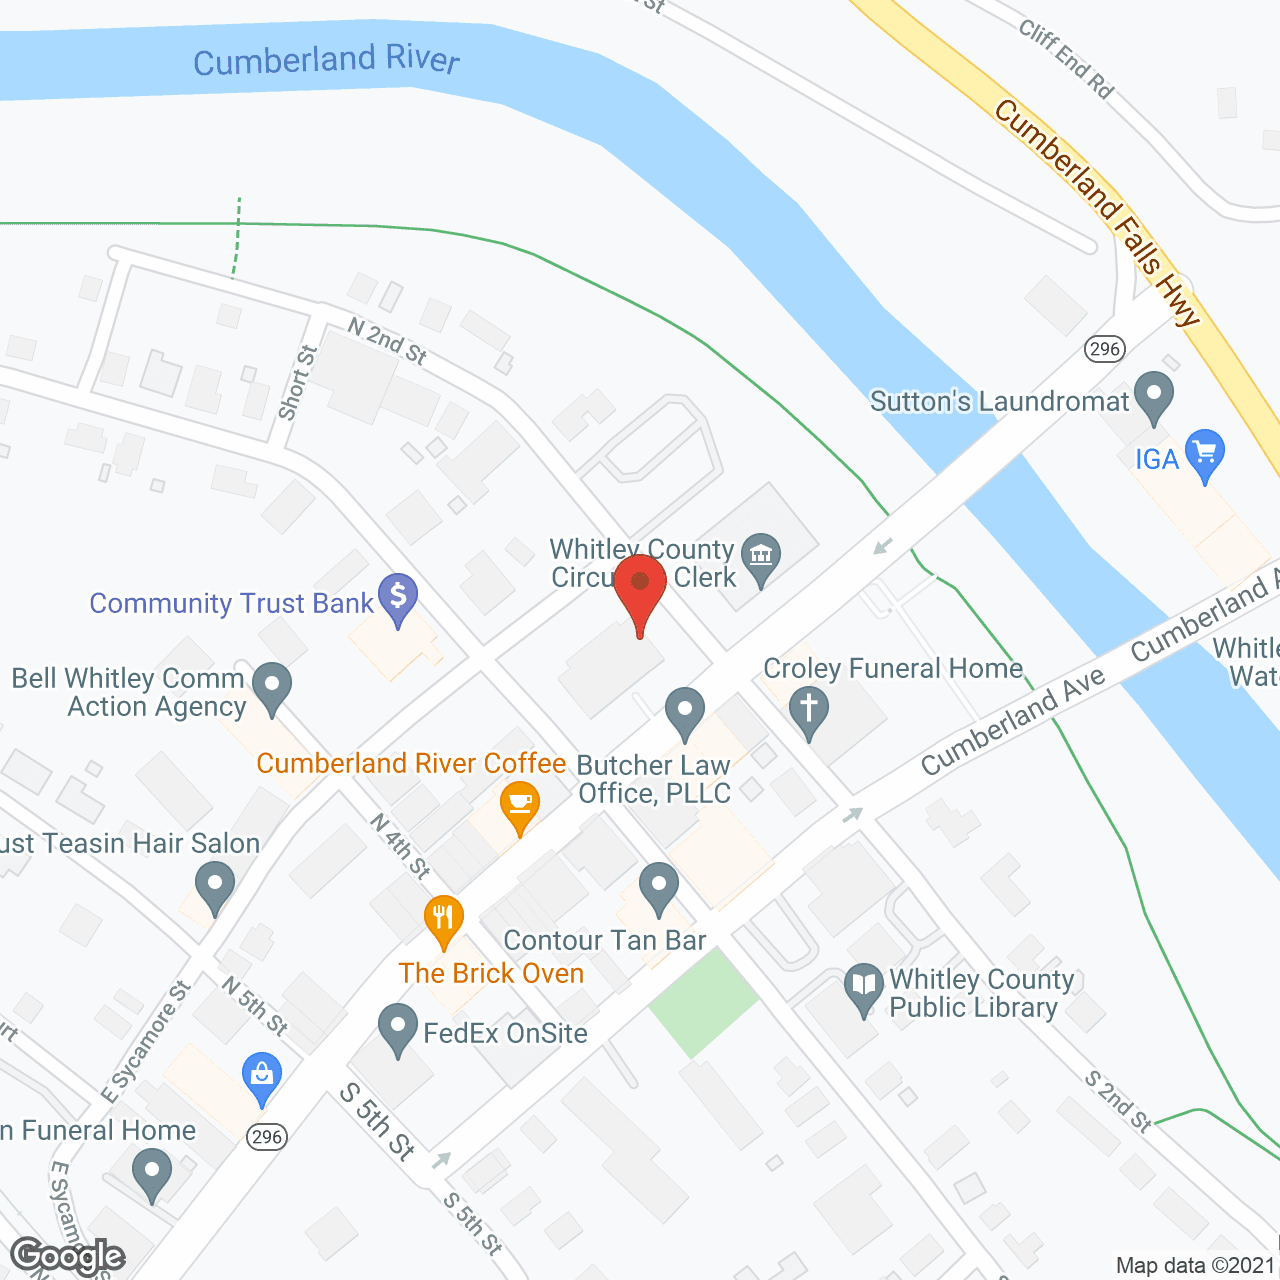 Williamsburg Nusing Home in google map